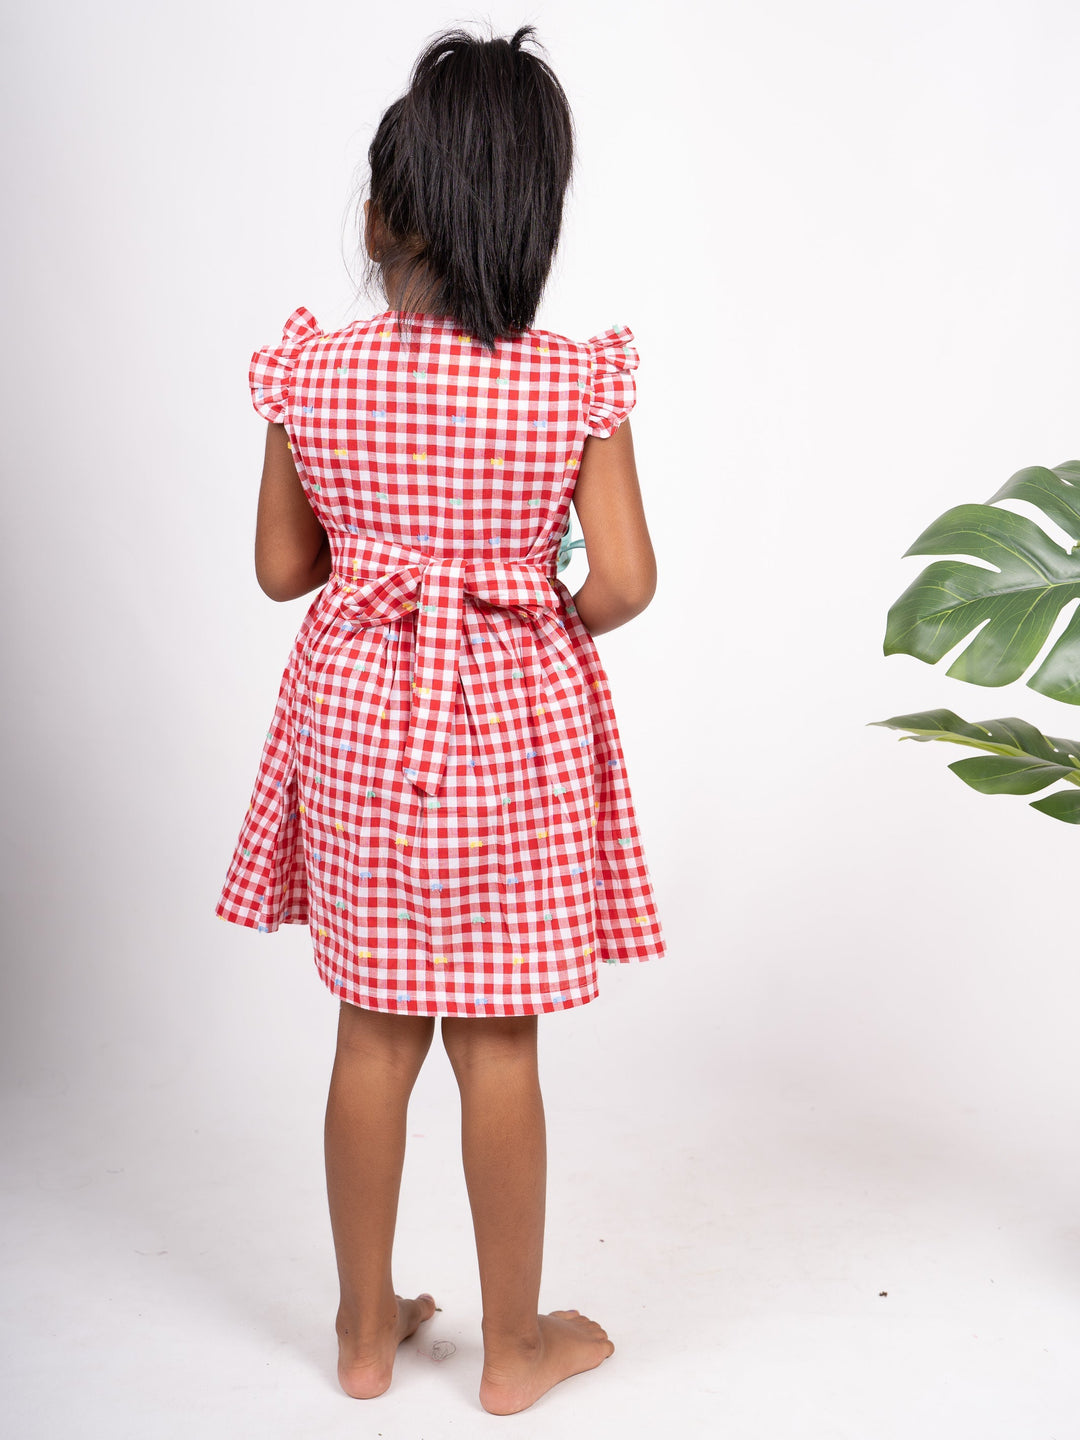 The Nesavu Frocks & Dresses Red And White Checked Cotton Frock For Girl Kids psr silks Nesavu